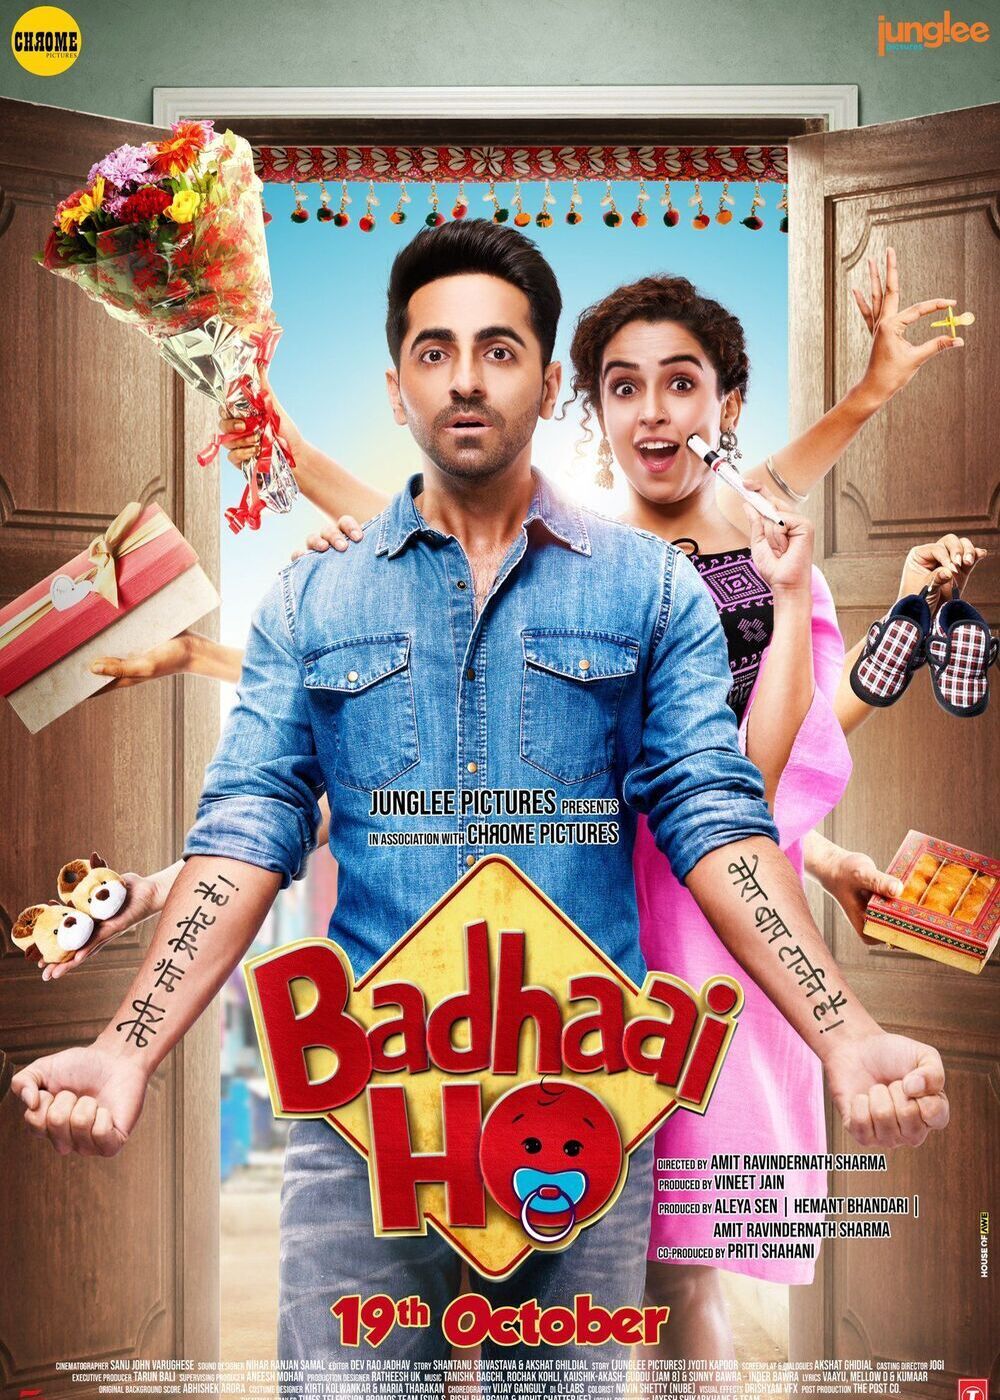 Badhaai Ho Movie Release Date, Cast, Trailer, Songs, Review